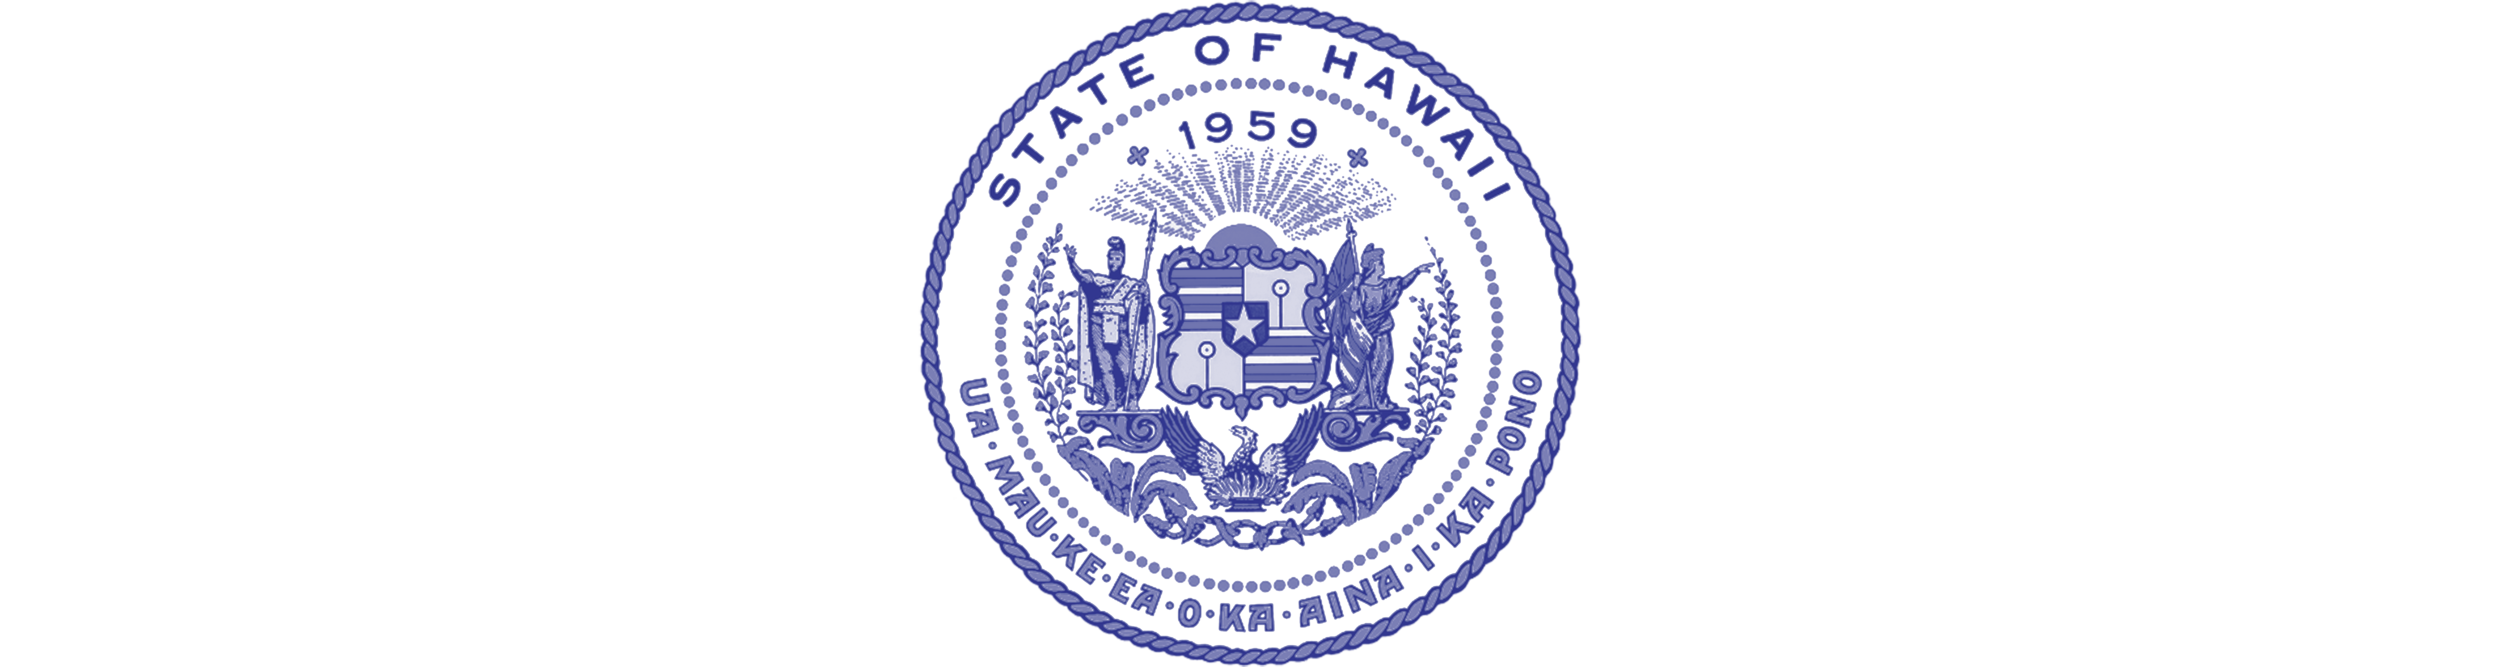 HPHA-waiwai-logo-State-Hawaii.png